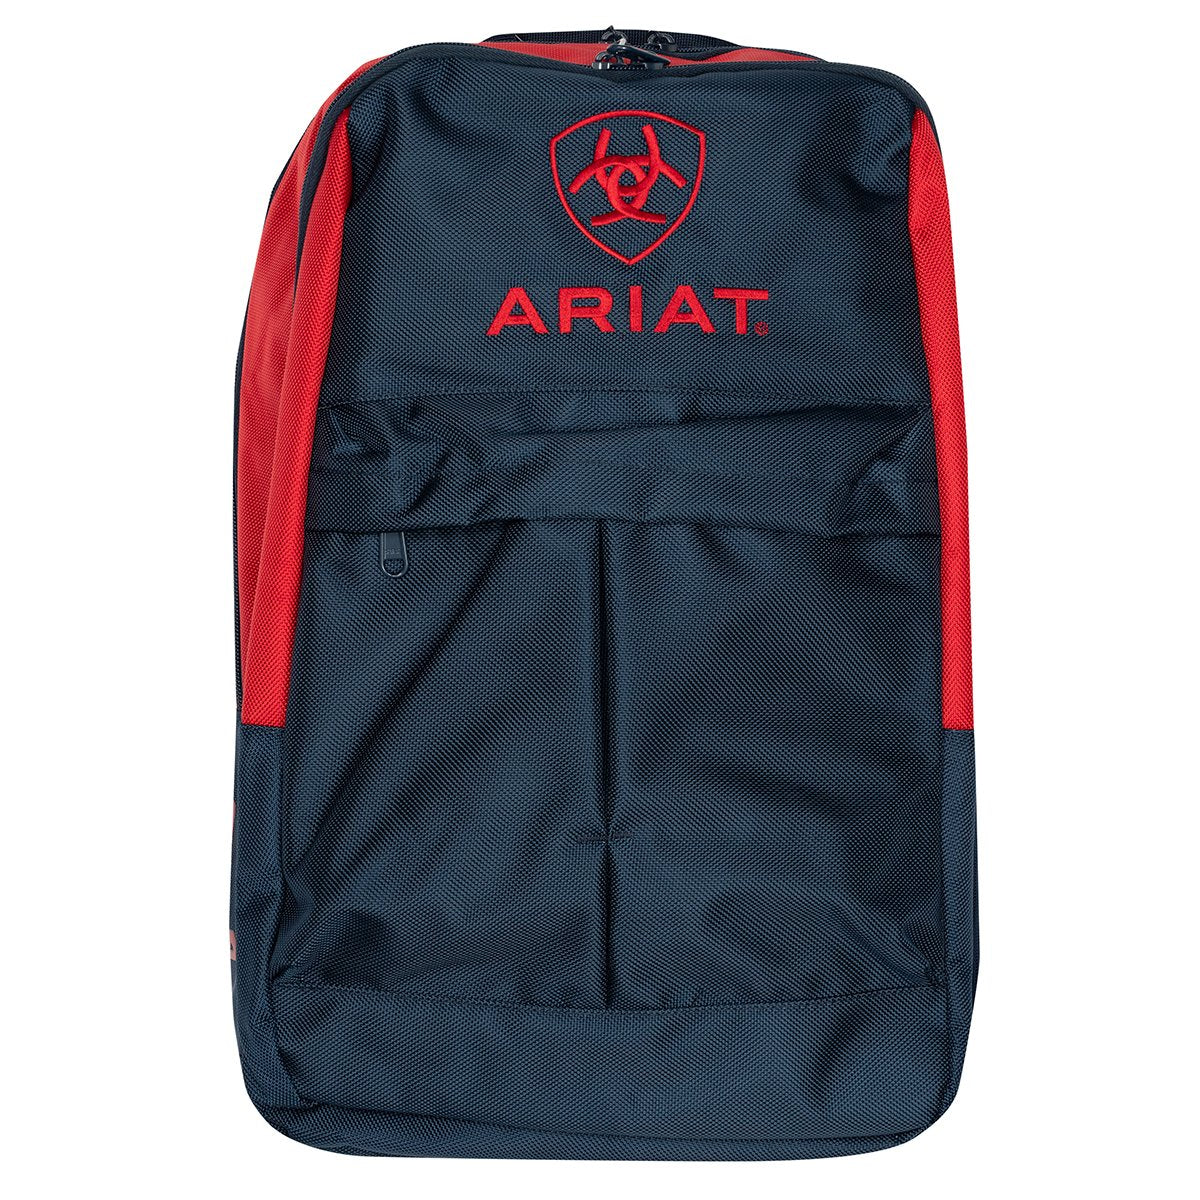 Ariat Back Pack